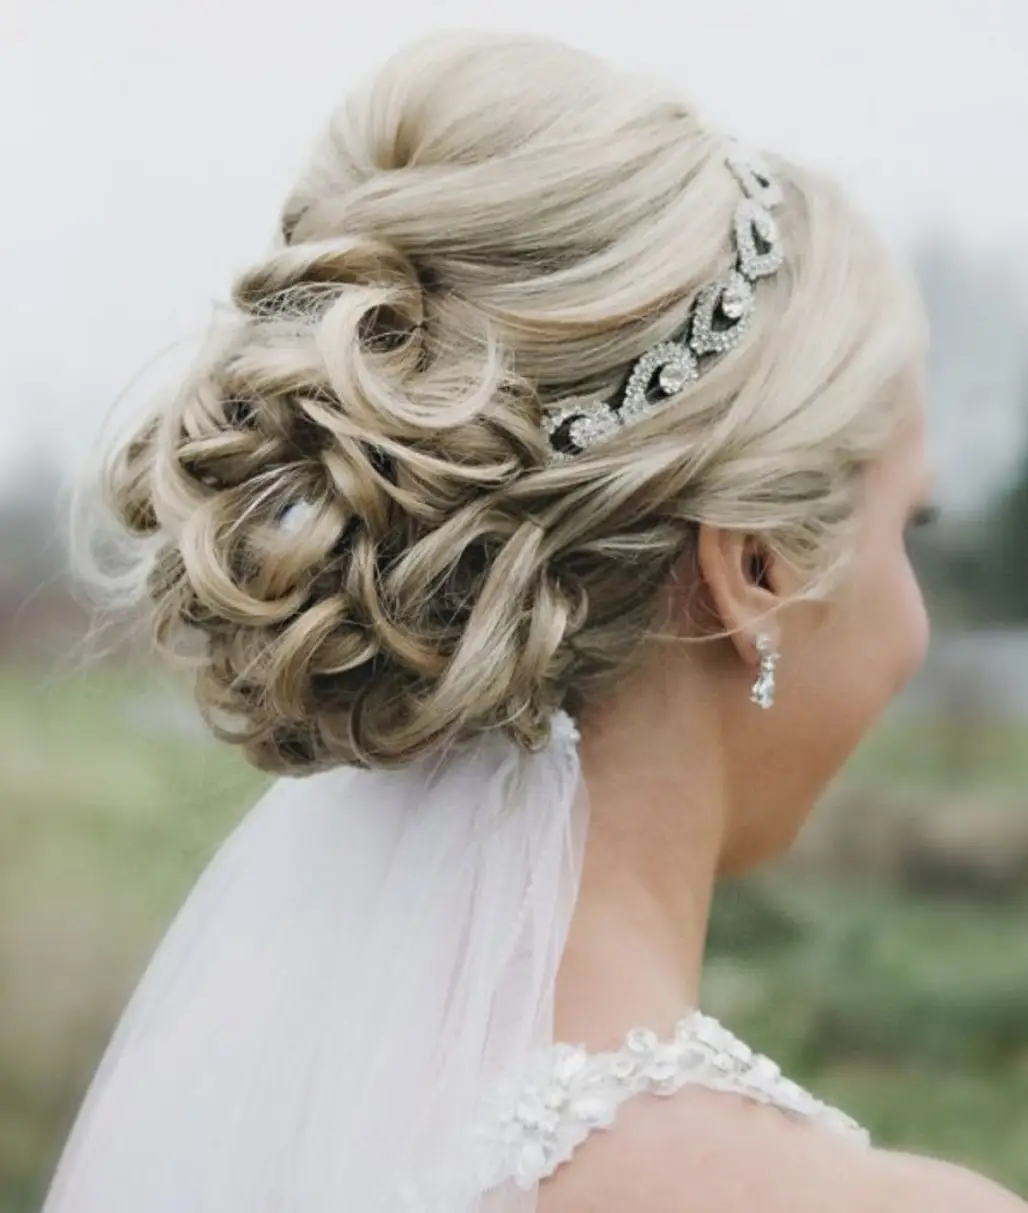 hair,bridal accessory,hairstyle,bridal veil,blond,